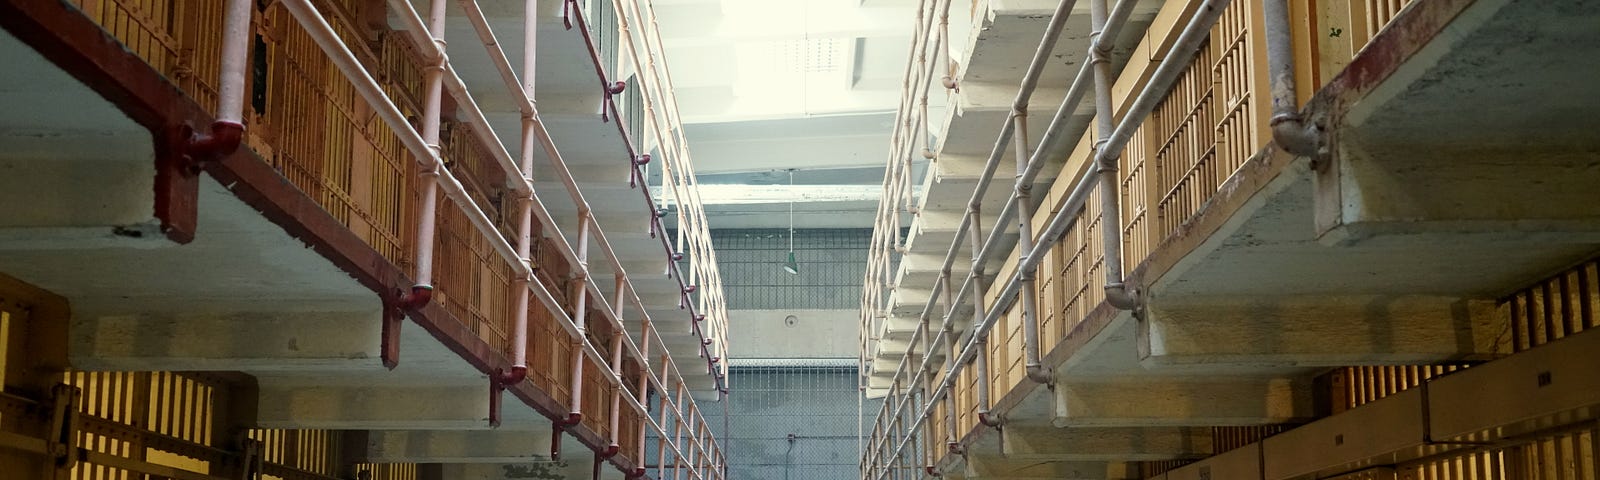 Empty Prison